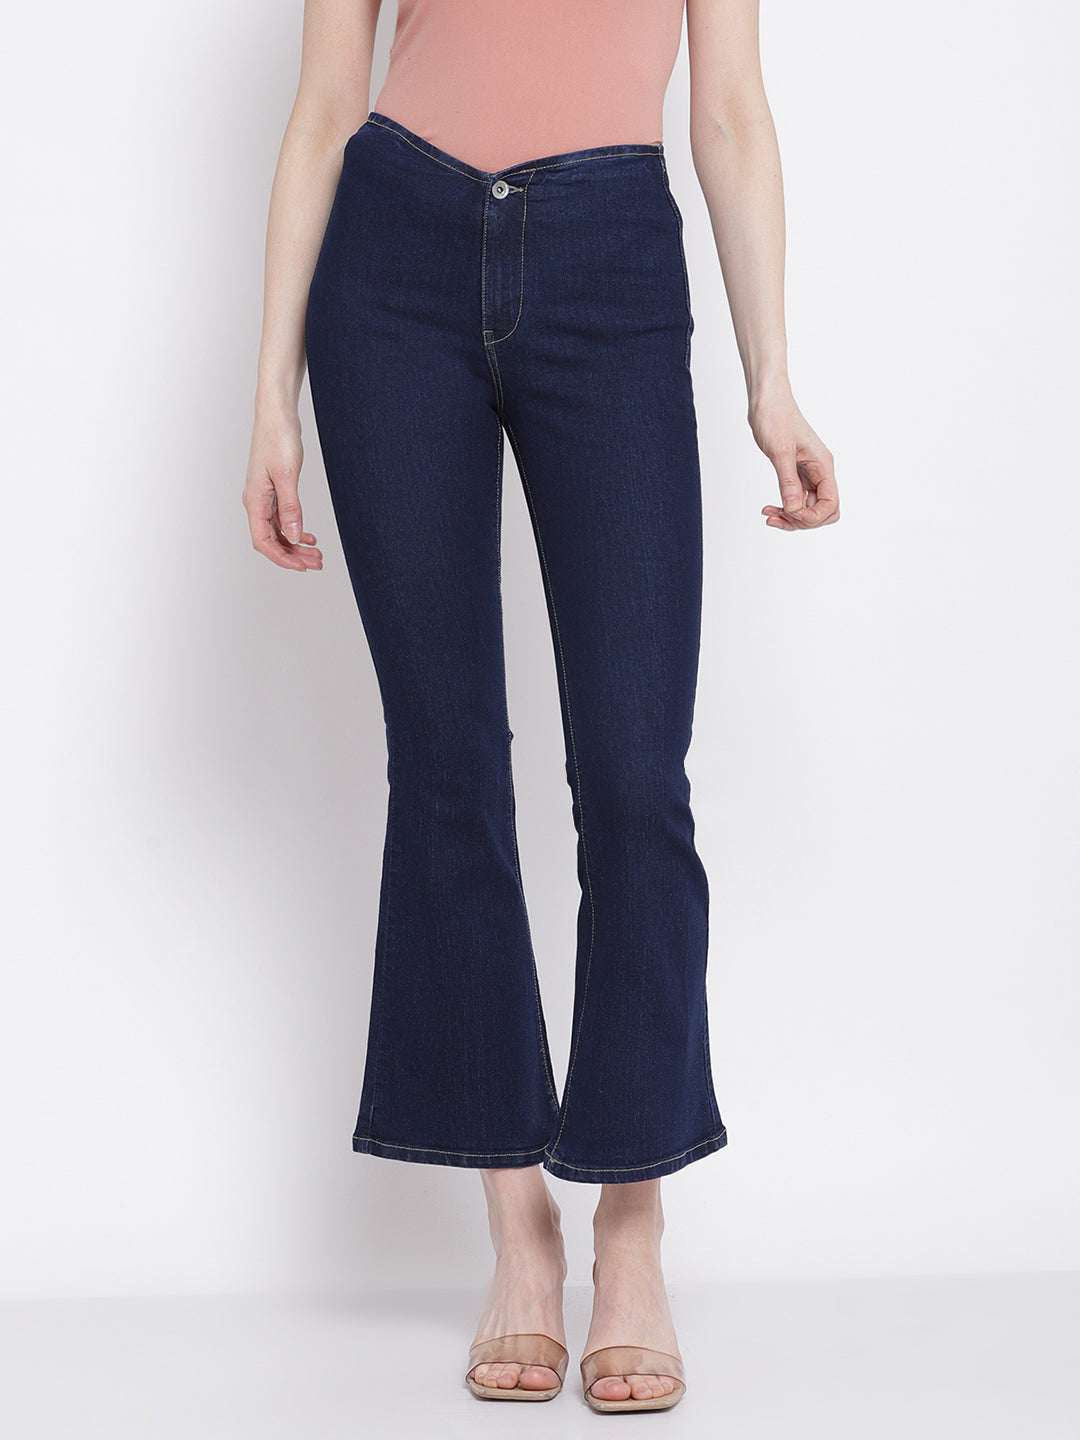 Buy Women Bell Bottom Fit Cropped Length Dark Black Jeans - Global Republic